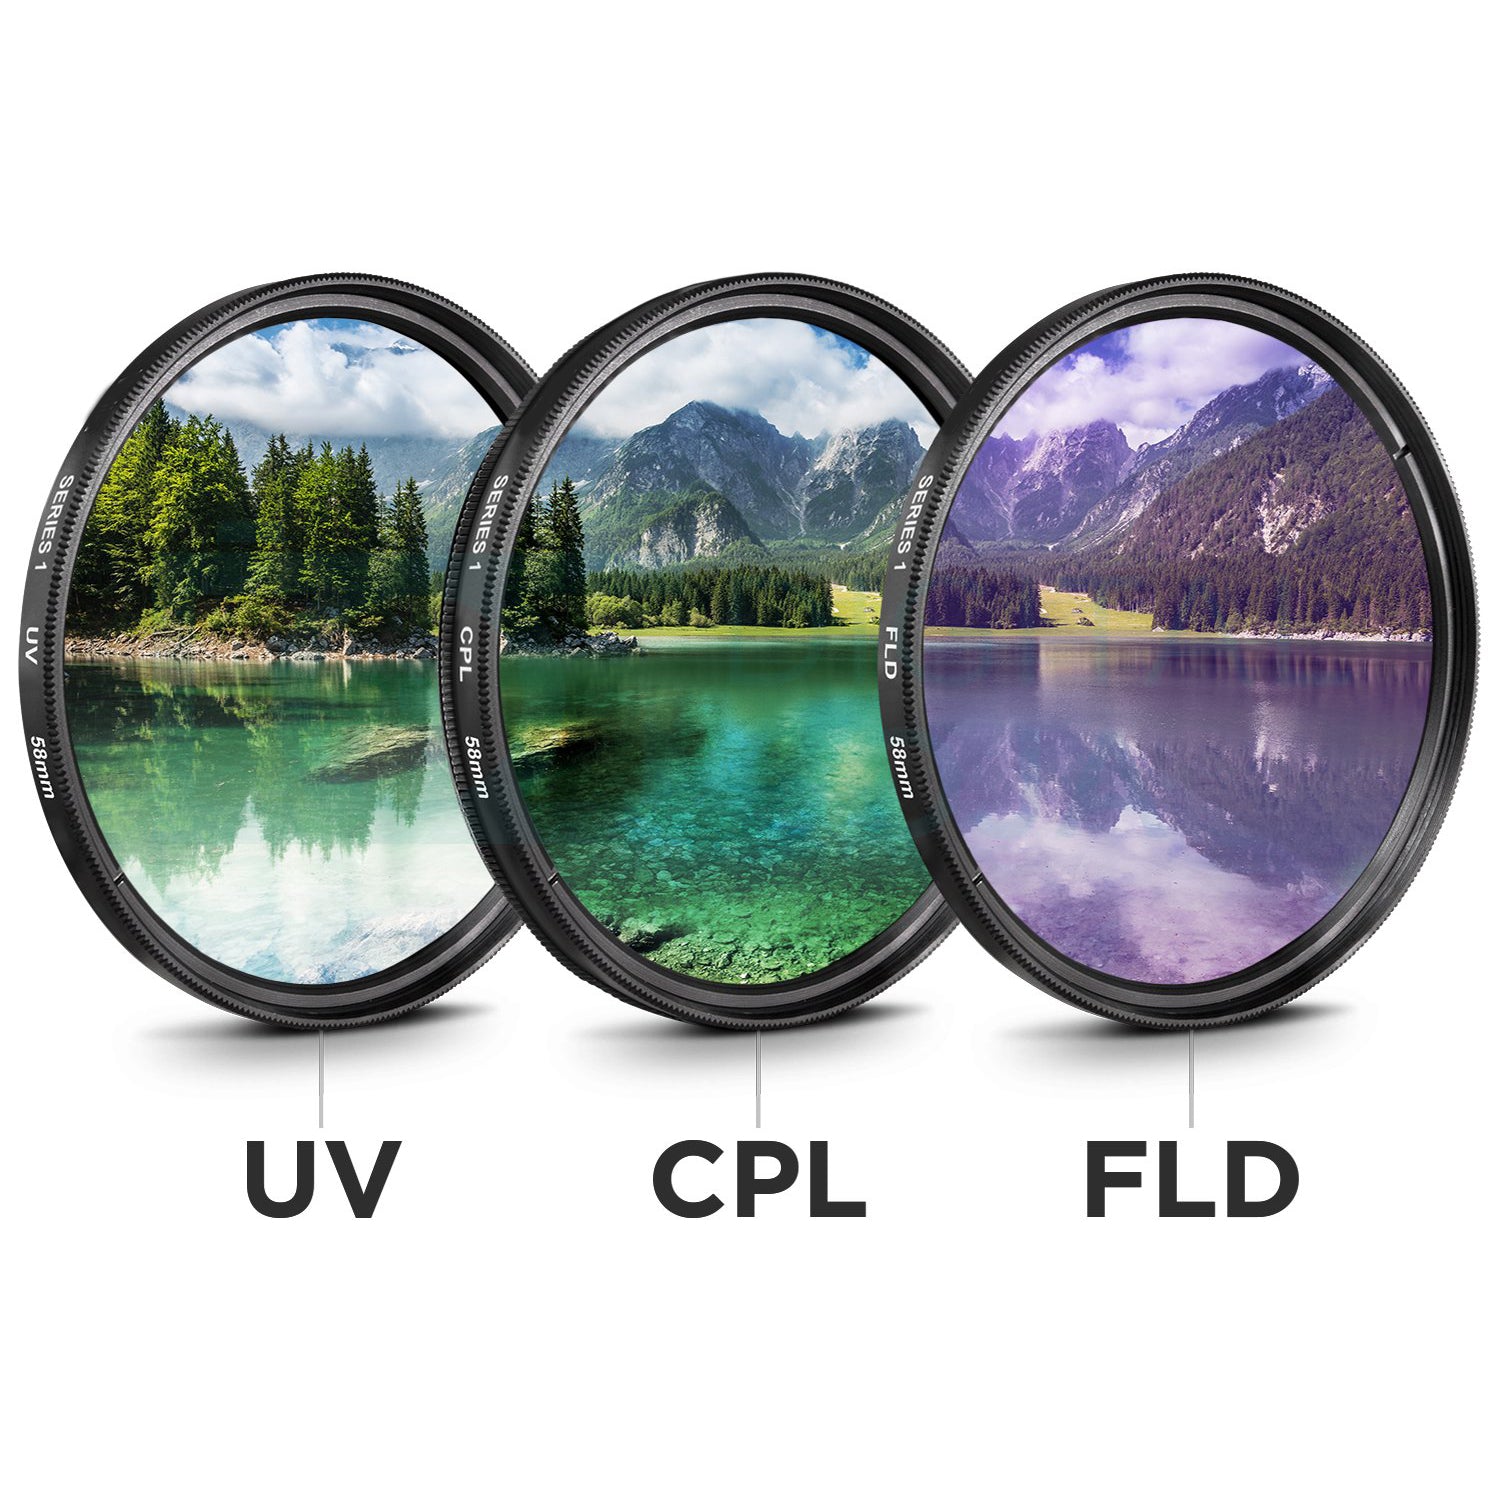 Canon EF 70-300mm f/4-5.6L IS USM Lens Essential Bundle Kit for Canon EOS - International Model No Warranty